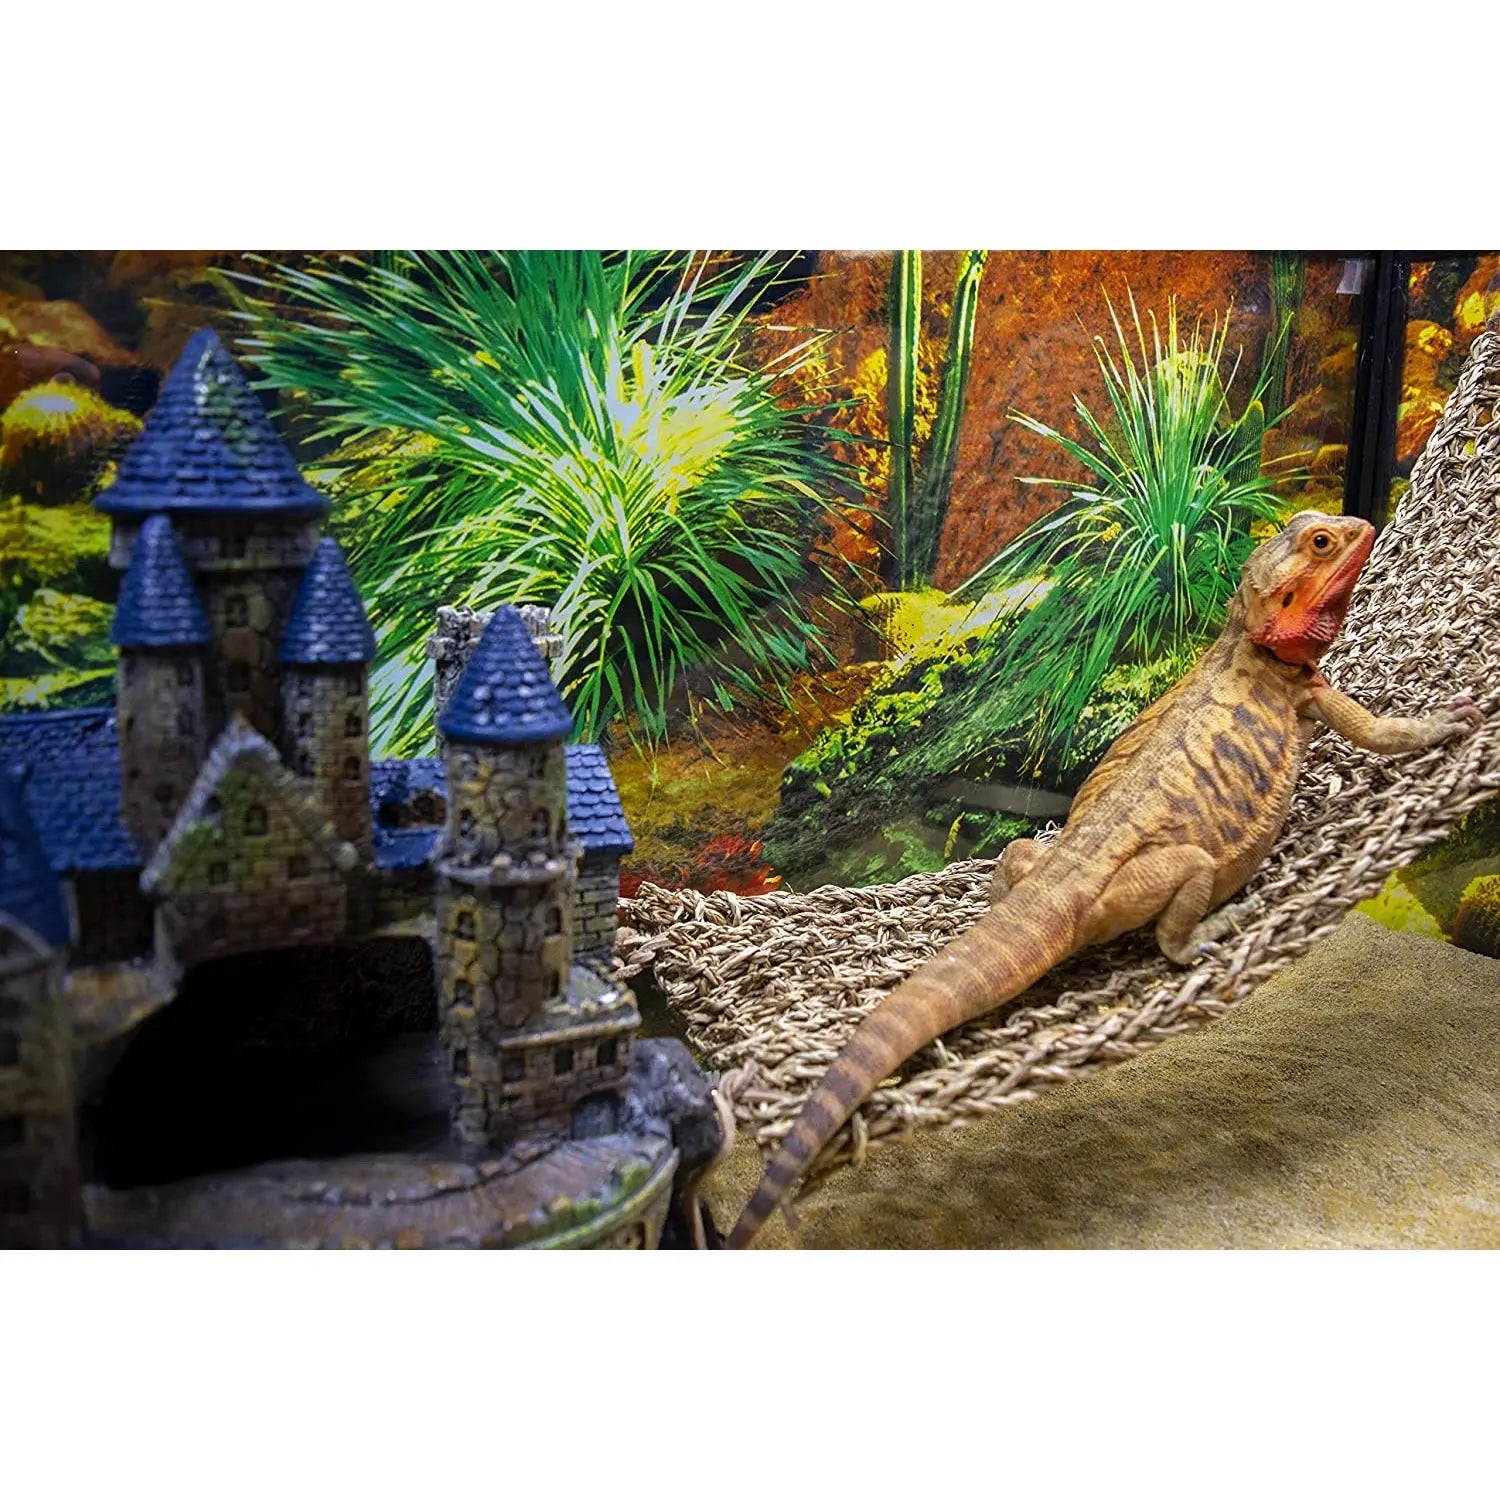 Reptology Castle Hide-Away & Lizard Lounger Bridge Reptile Habitat Decorations Reptology